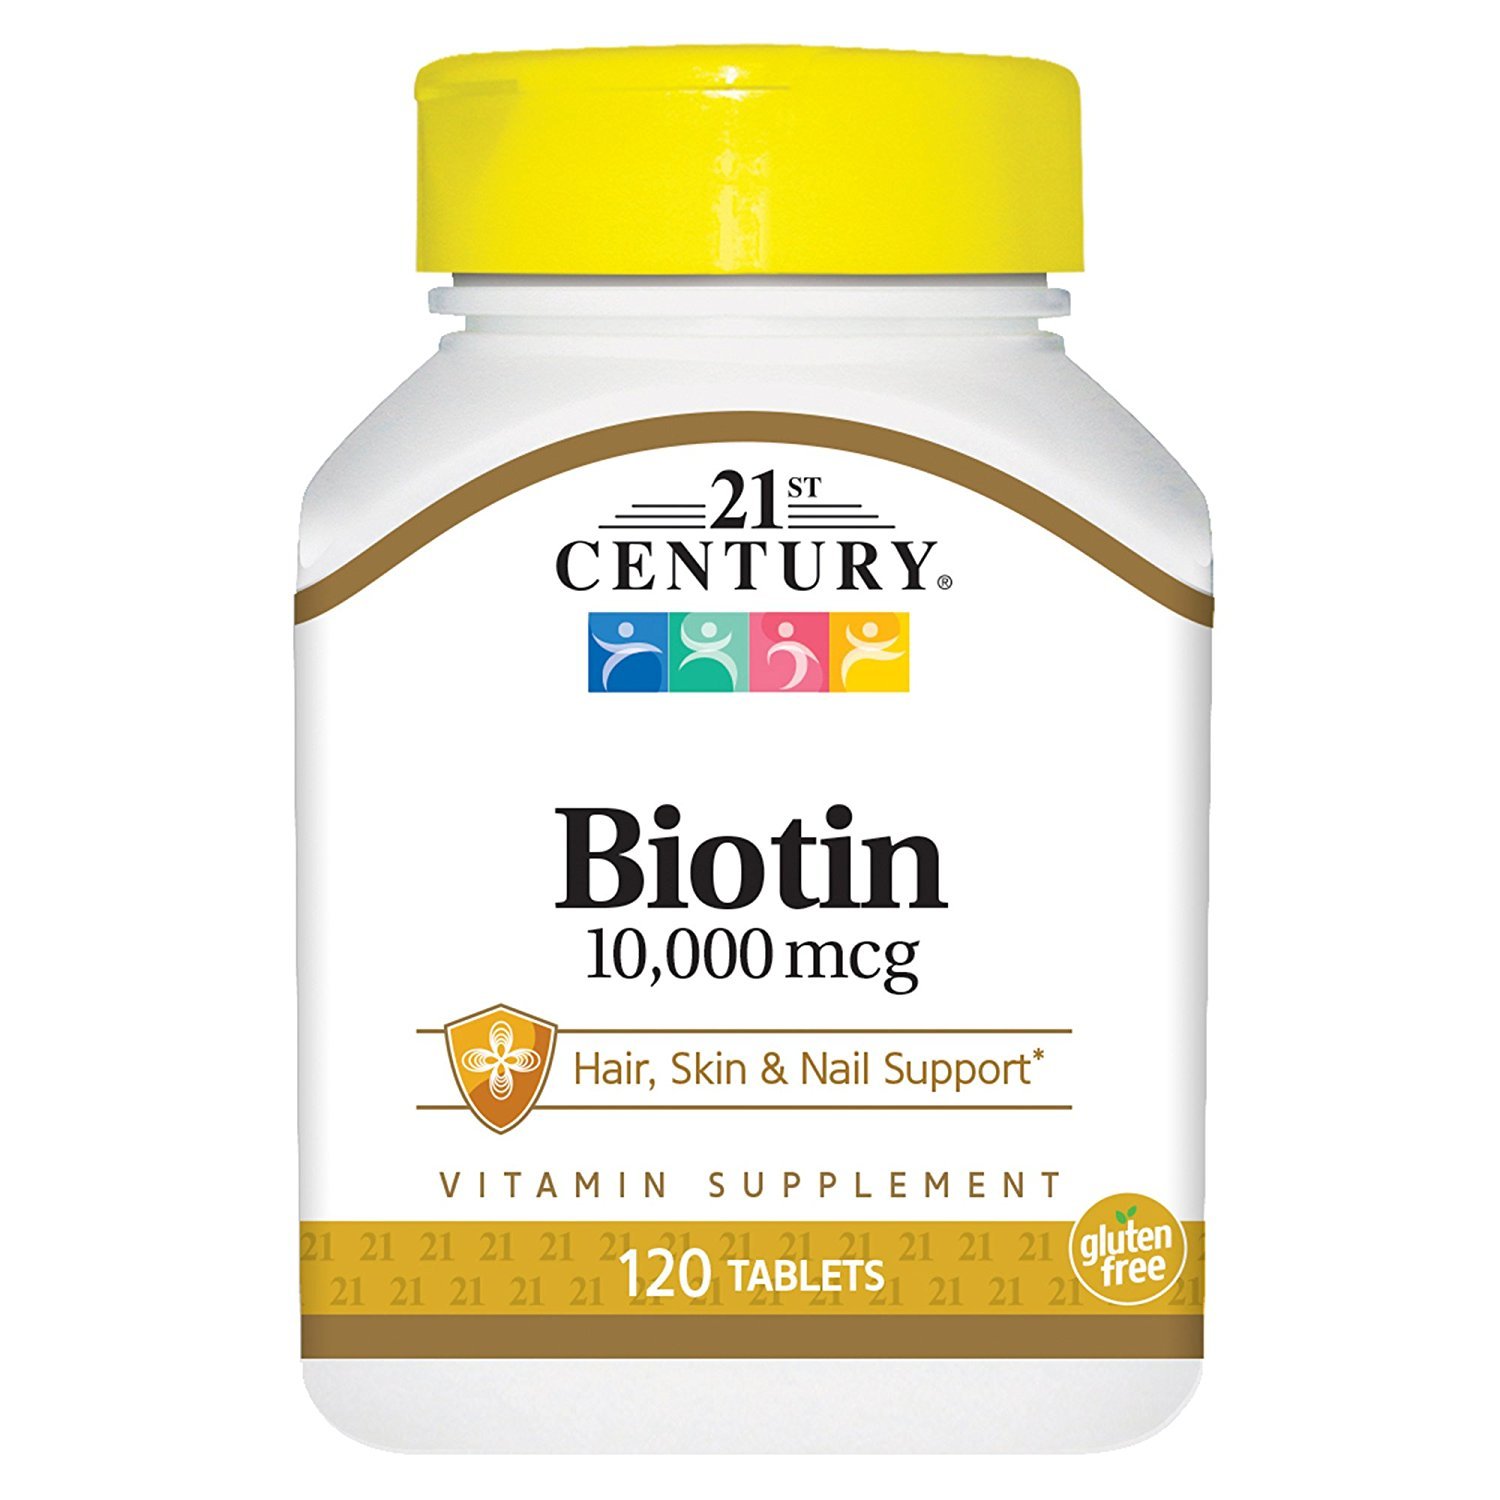 21st-century-biotin-10,000mcg-120-tablets